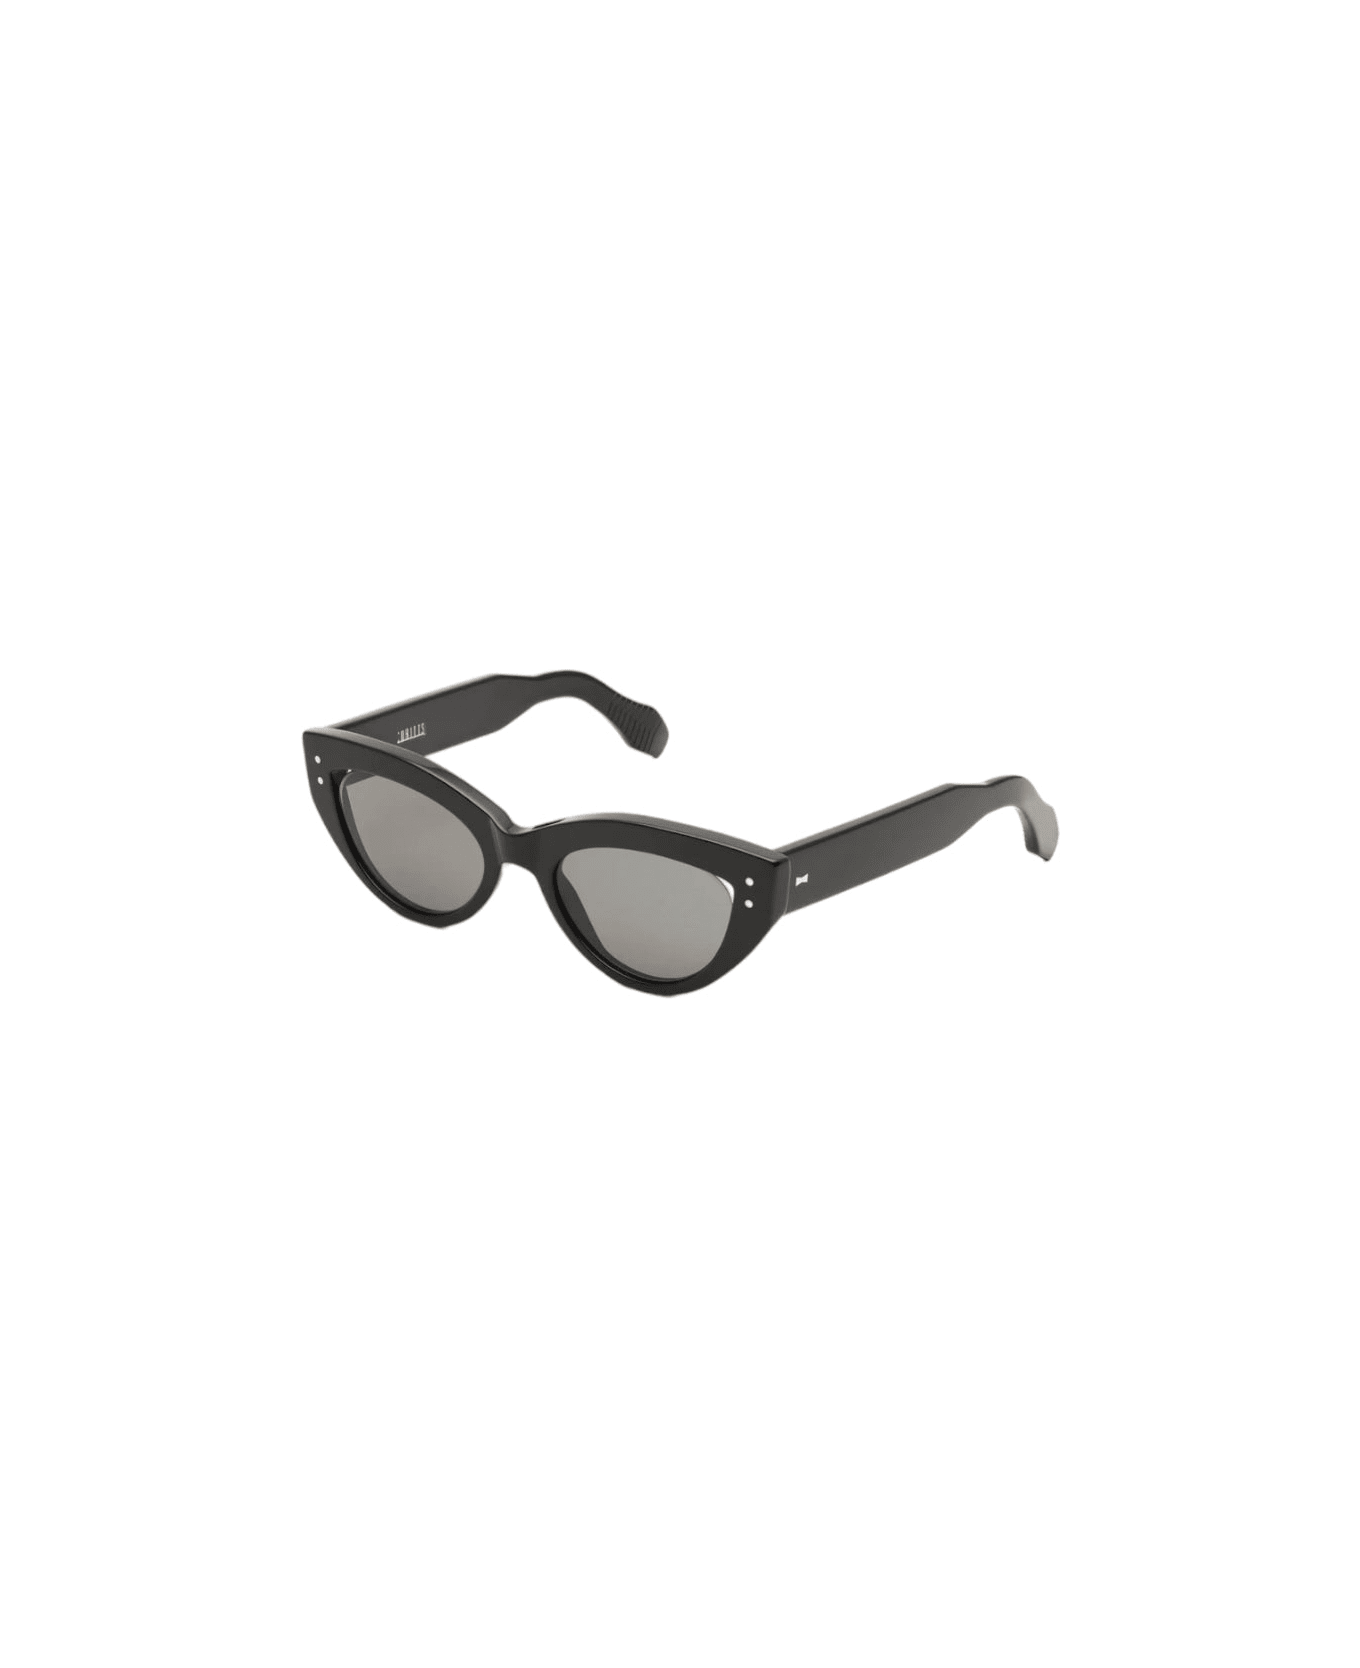 Cubitts Caledonia Sunglasses サングラス